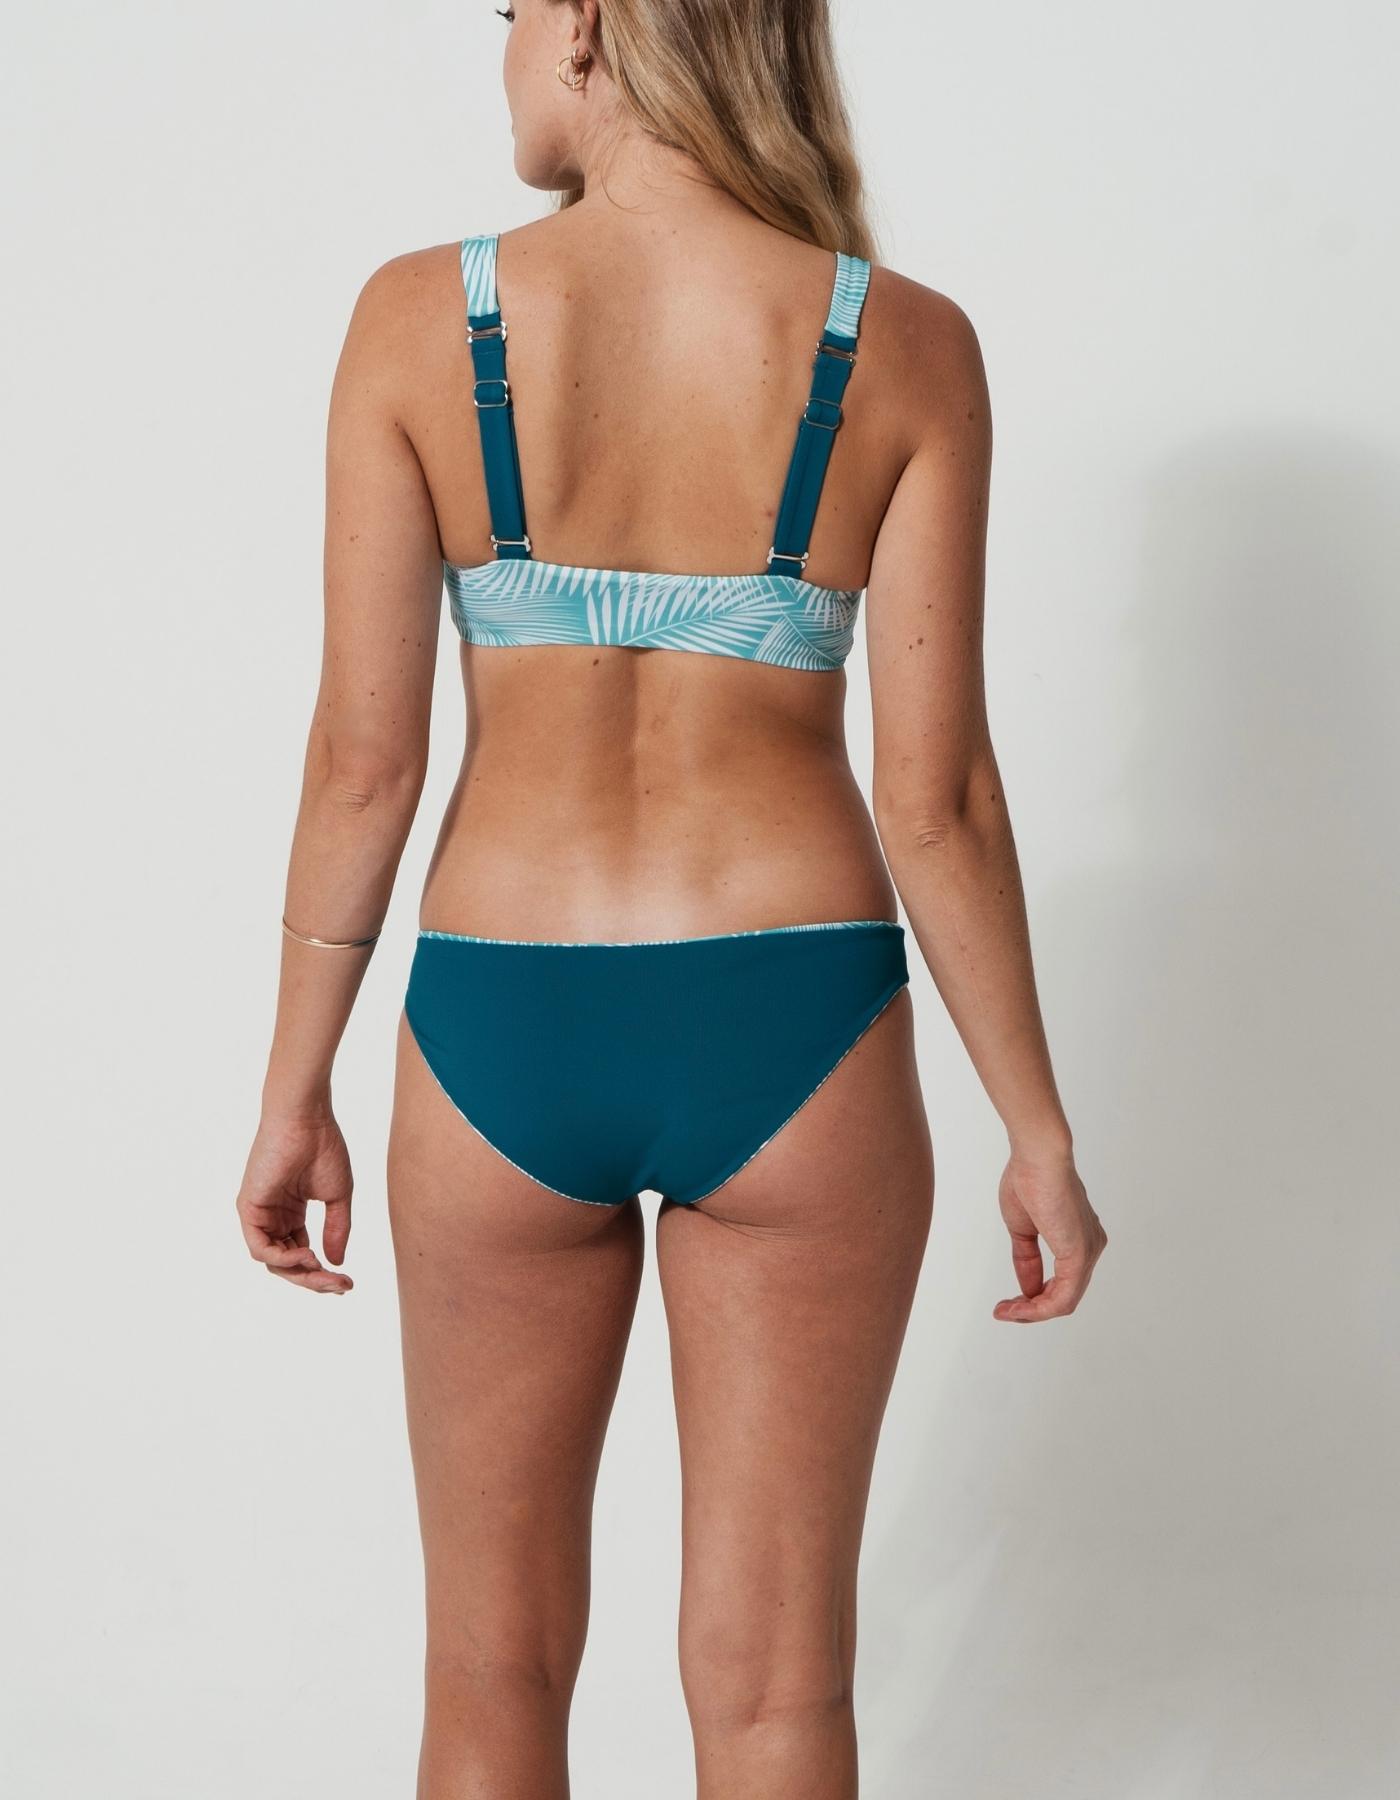 Sandbar_swimwear_family_matching_low_waist_bikini_eco_recycled_tank_top_bikini_reversible_Green_fern_teal